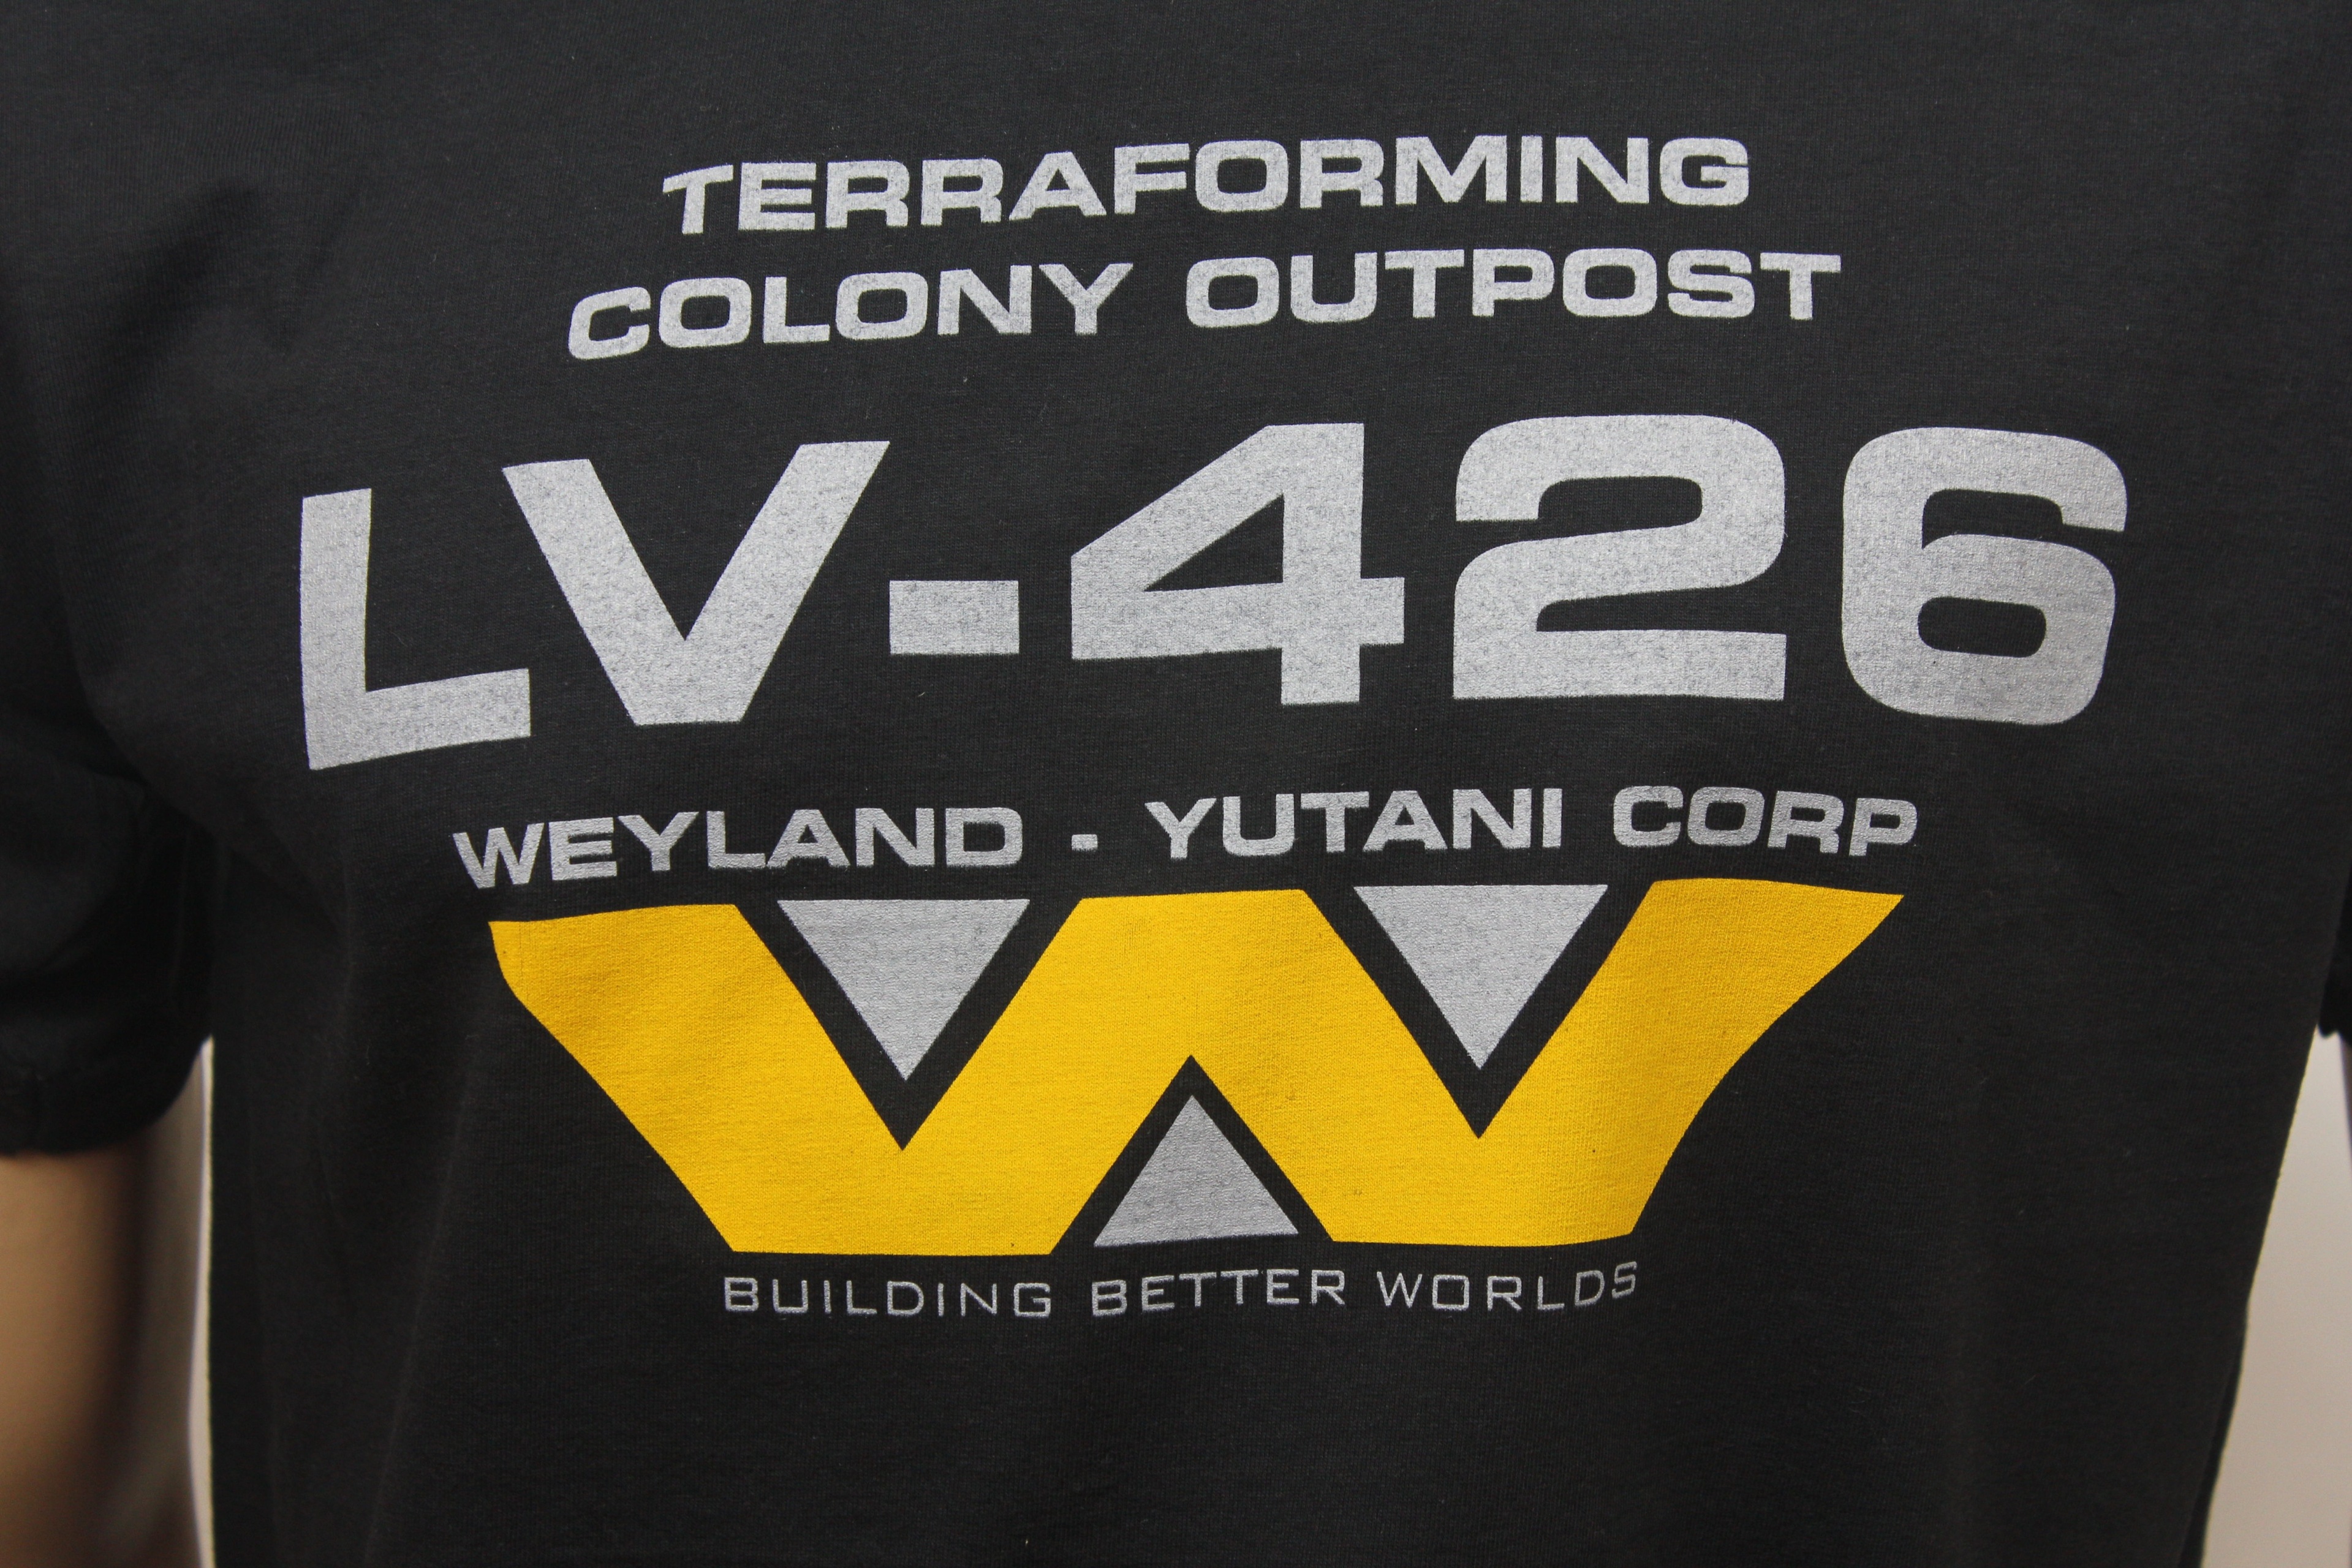 LV-426: Jurassic Alien Shirt @ That Awesome Shirt!